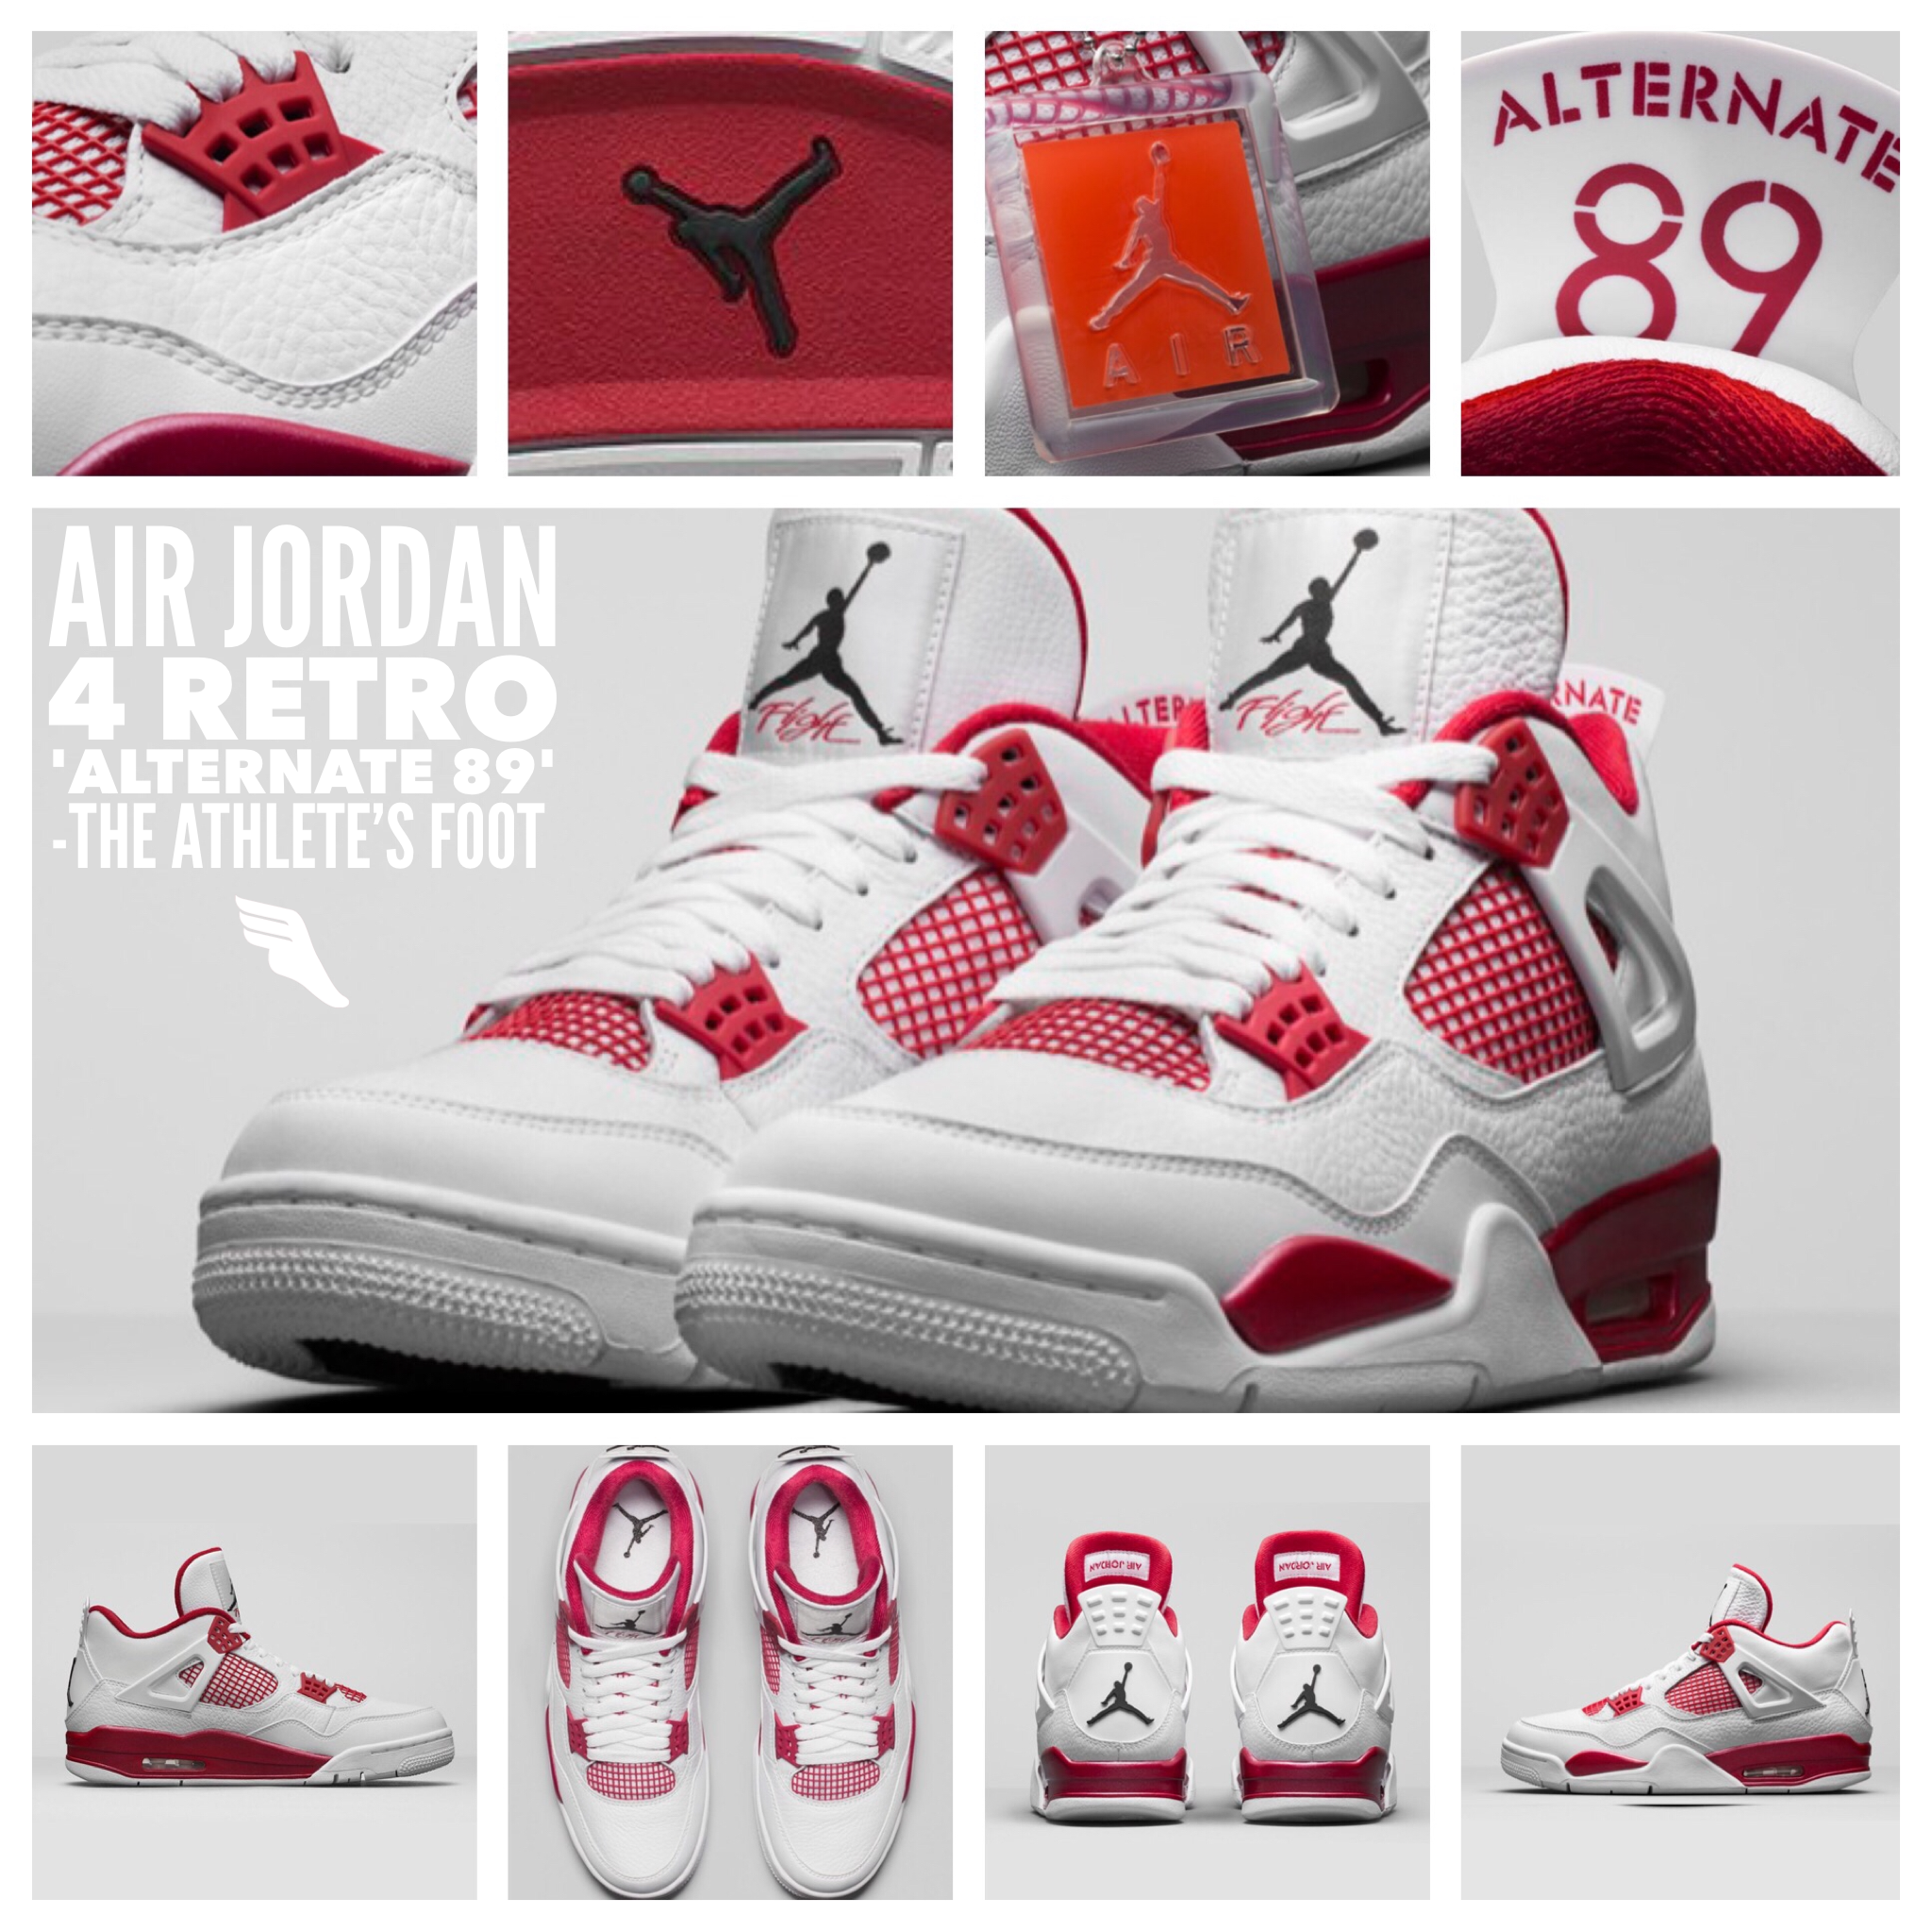 Air Jordan 4 Retro Alternate 89 l The 